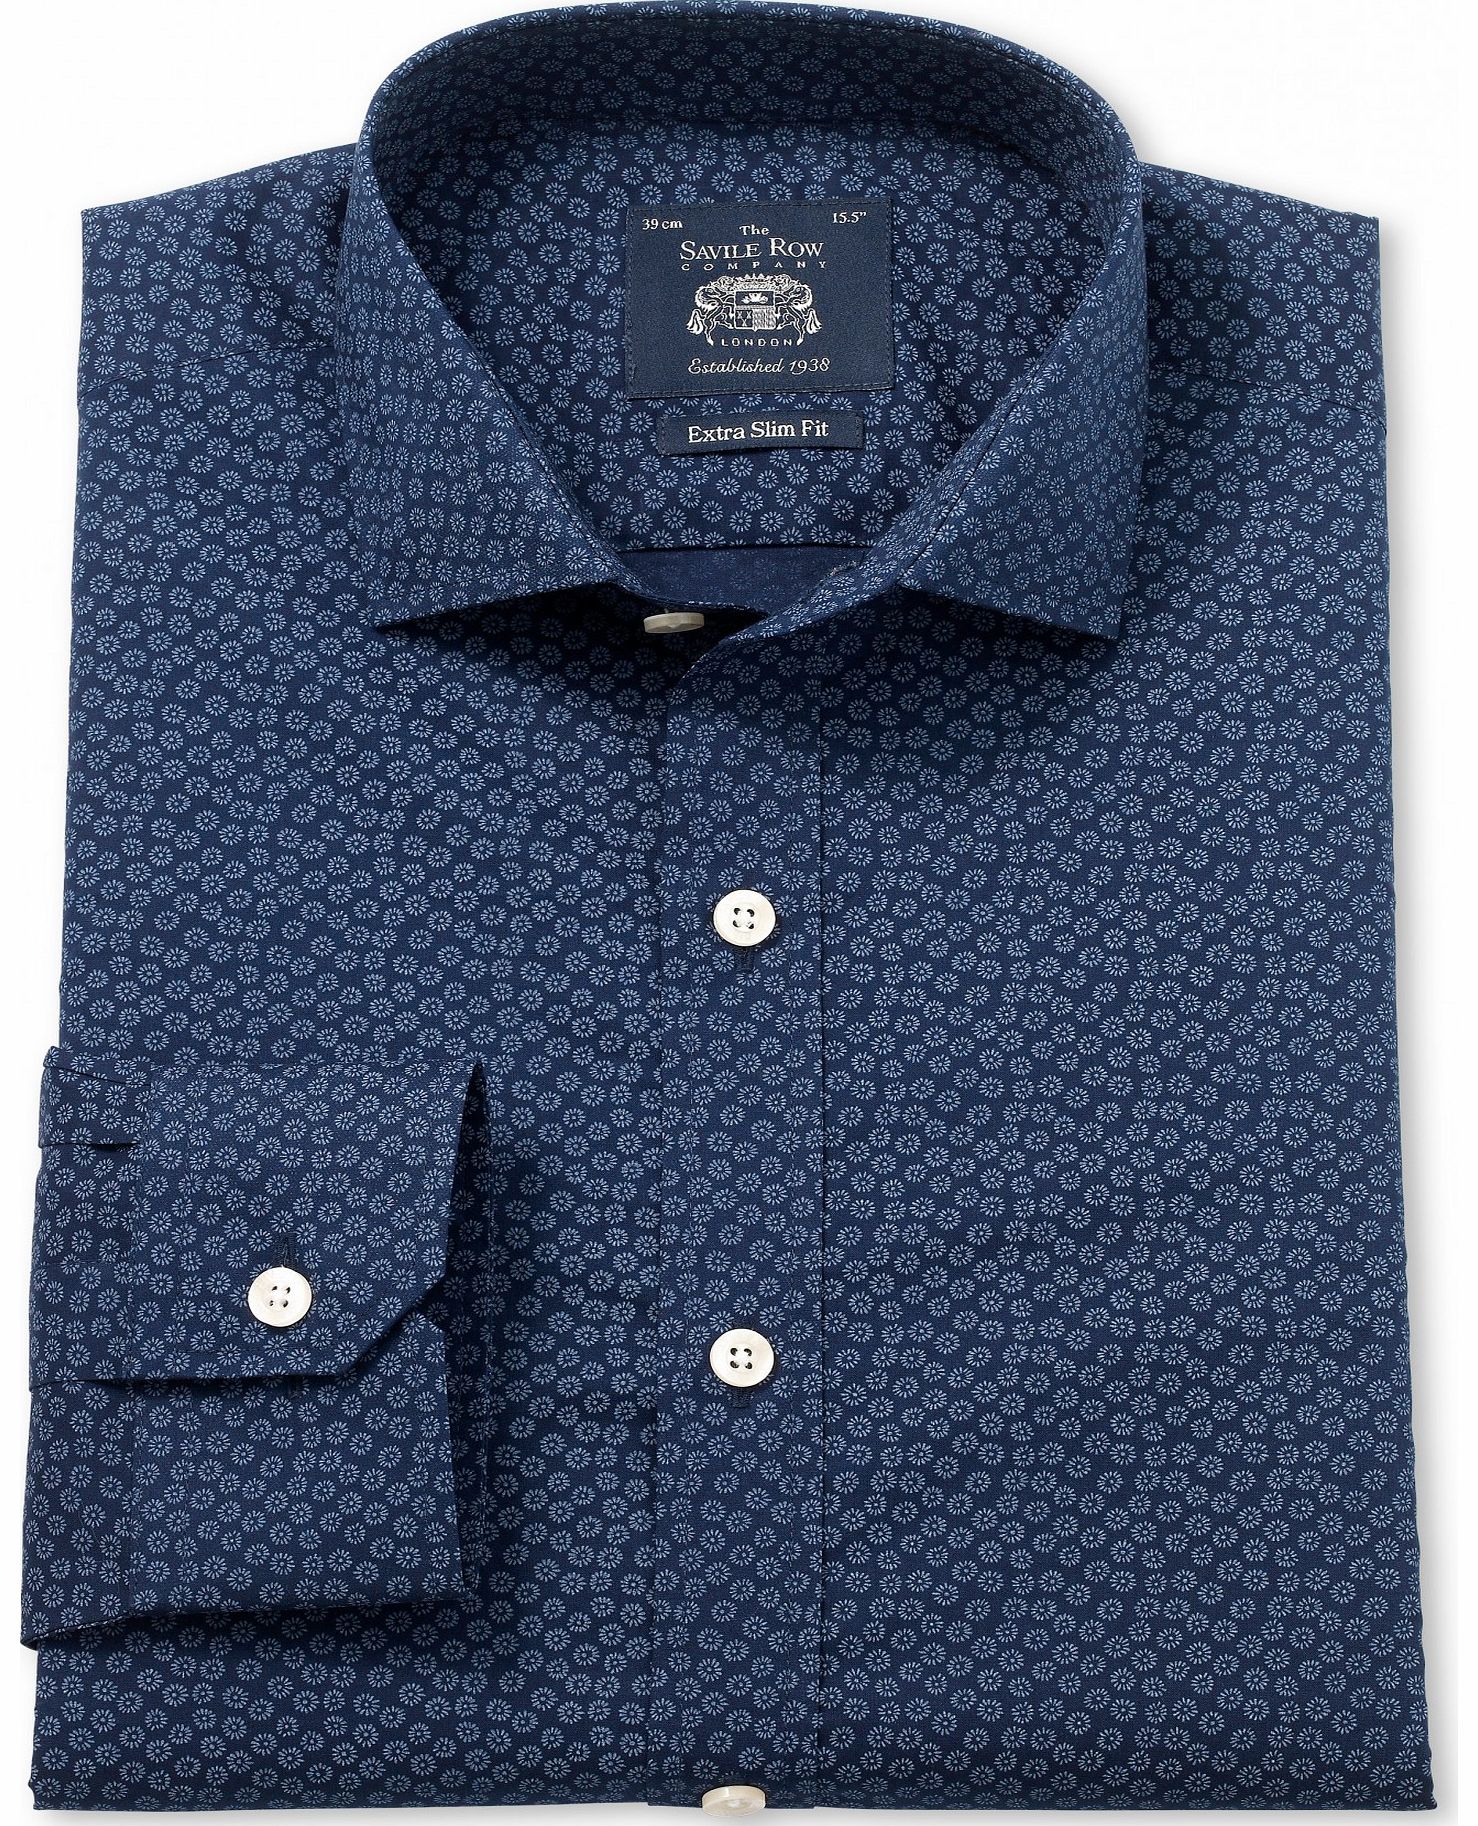 Navy Blue Printed Extra Slim Fit Shirt 15 1/2``